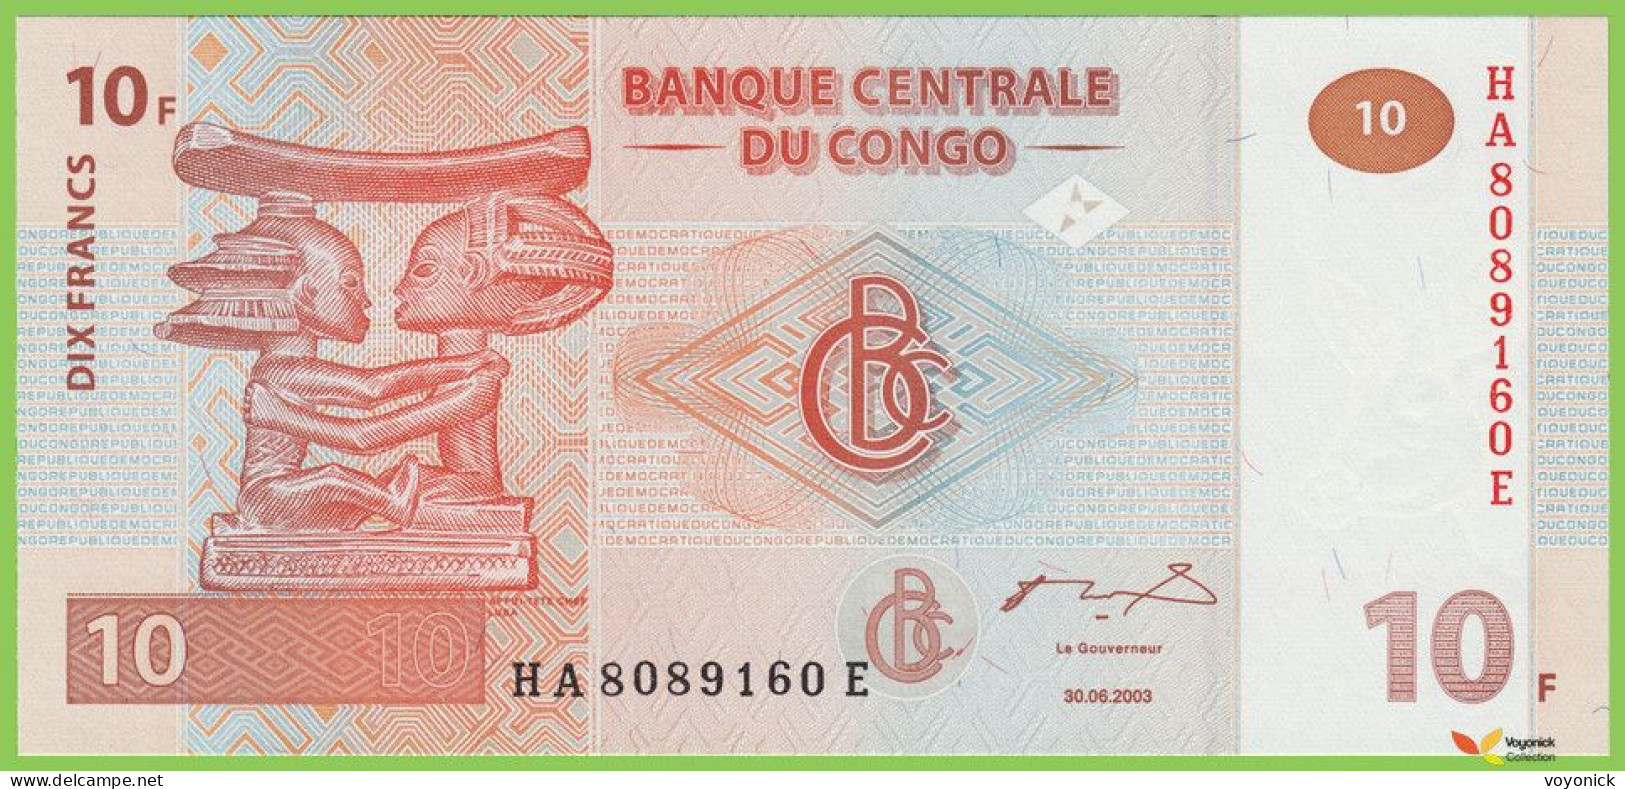 Voyo CONGO 10 Francs 2003 P93a B312 HA-E UNC - Republic Of Congo (Congo-Brazzaville)